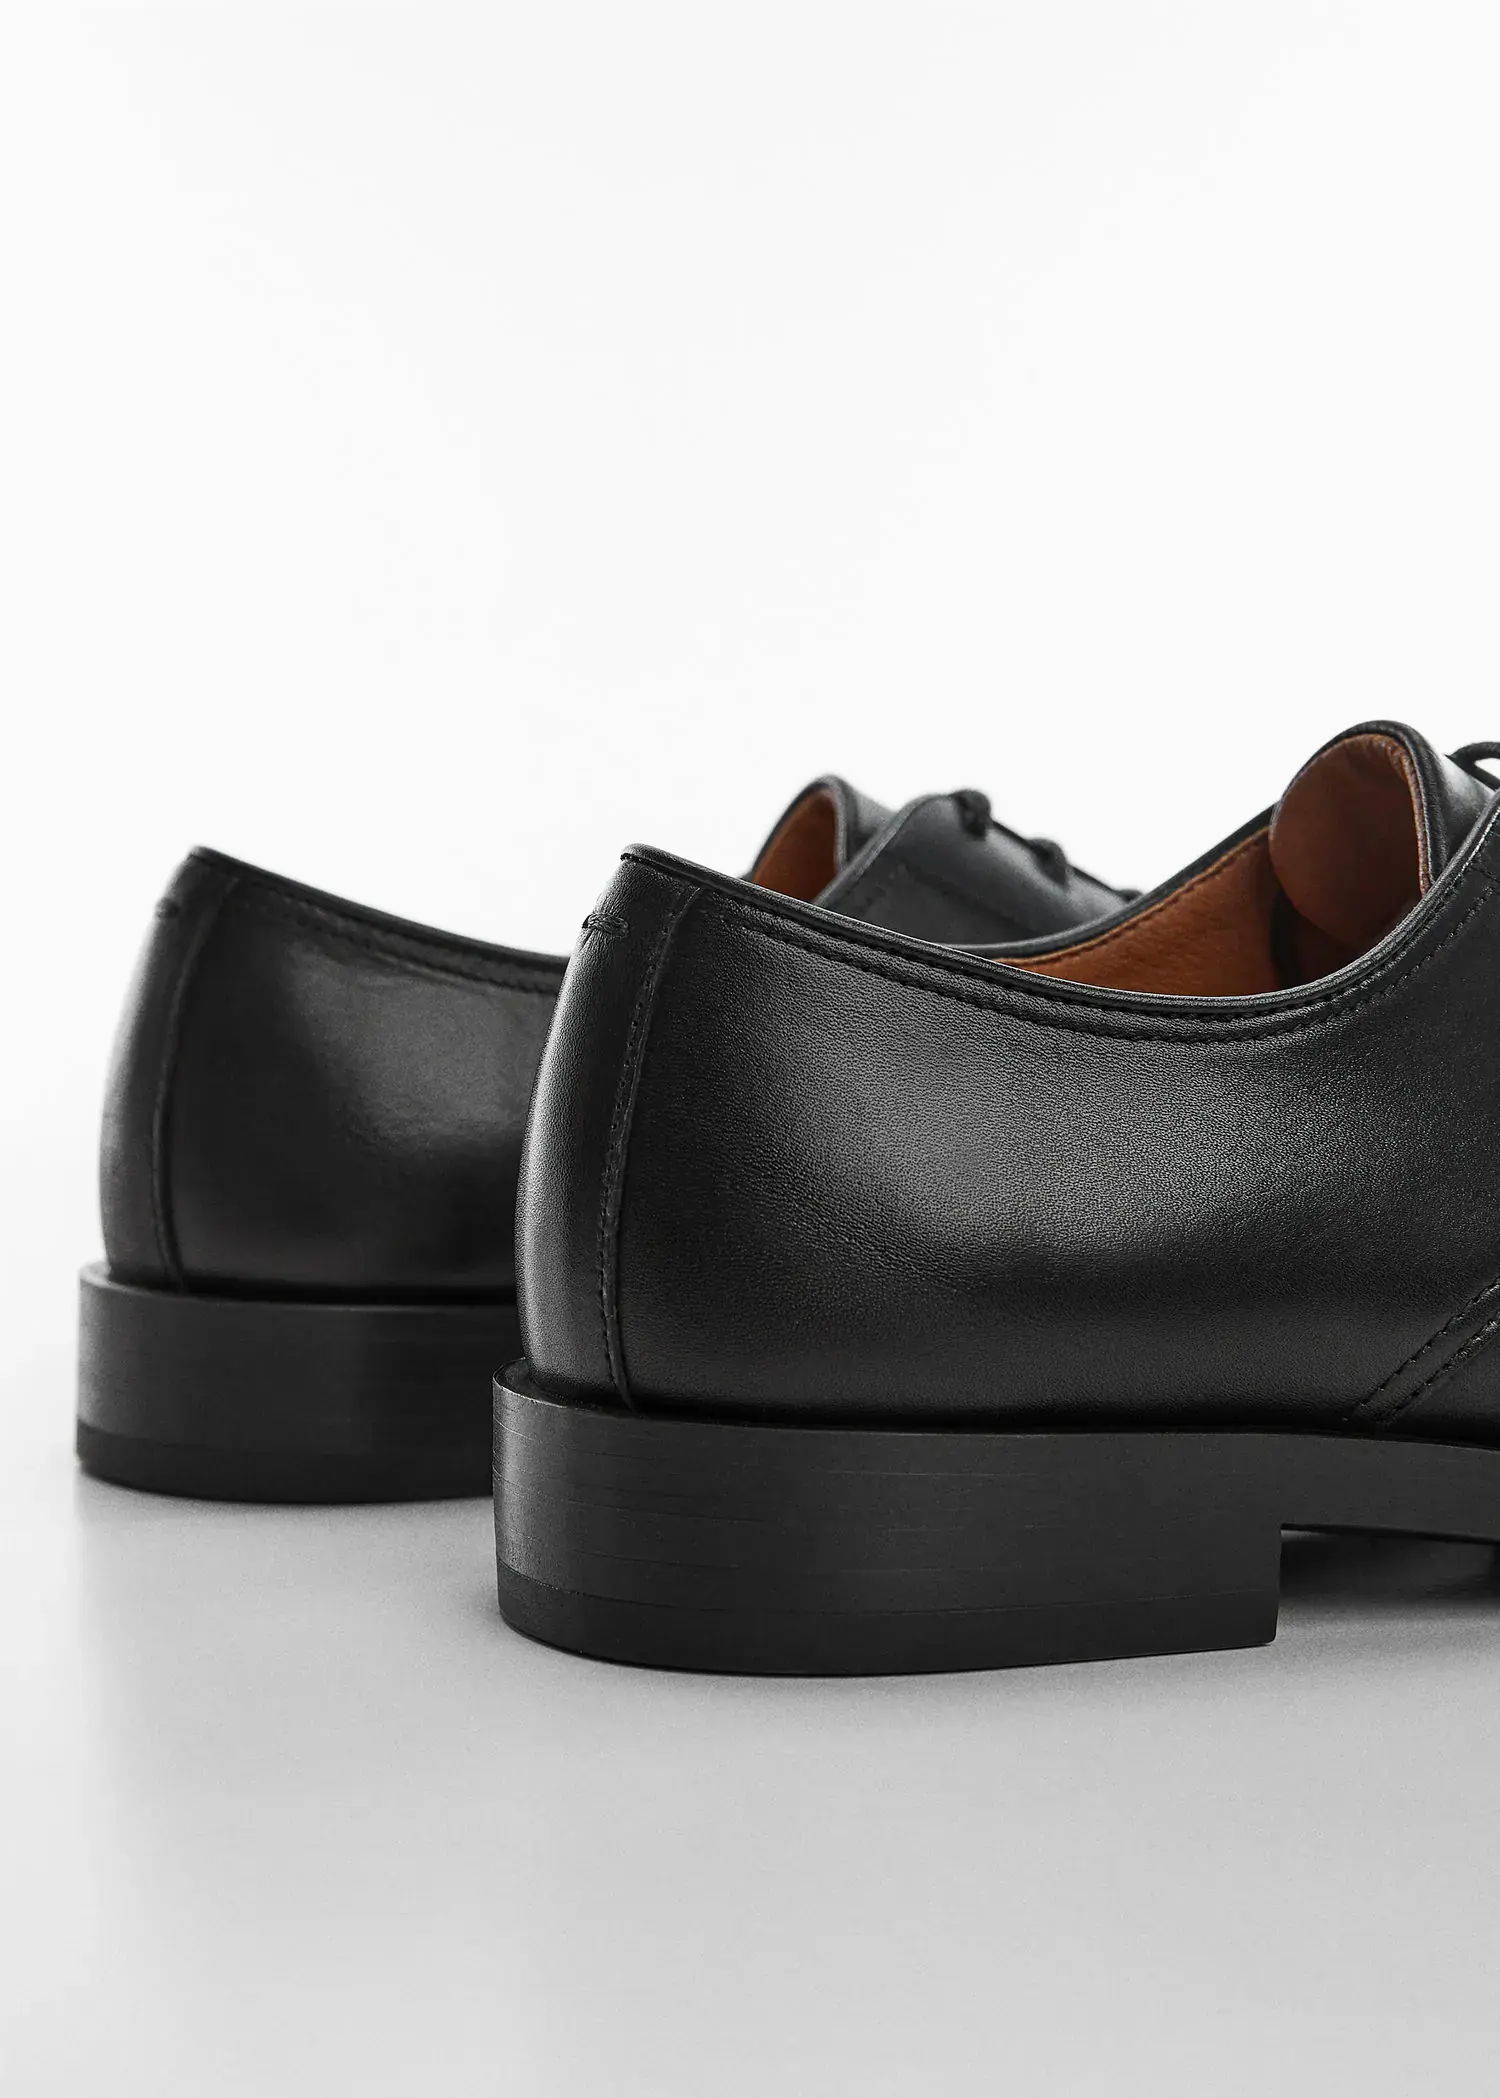 Mango Leather suit shoes. a close up of a pair of black shoes. 